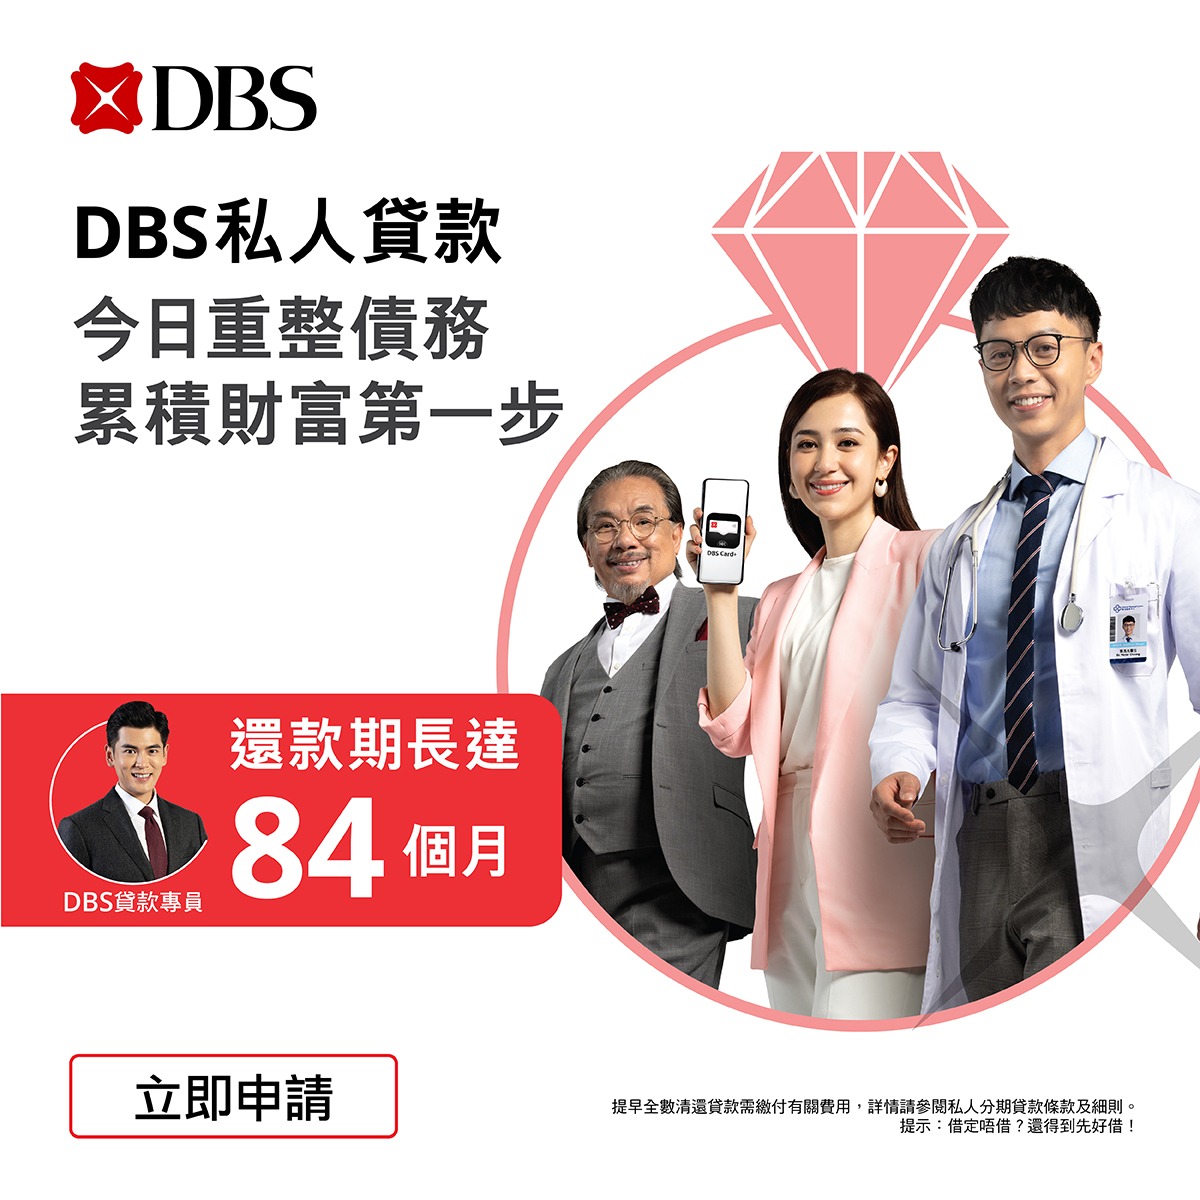 DBS Loan